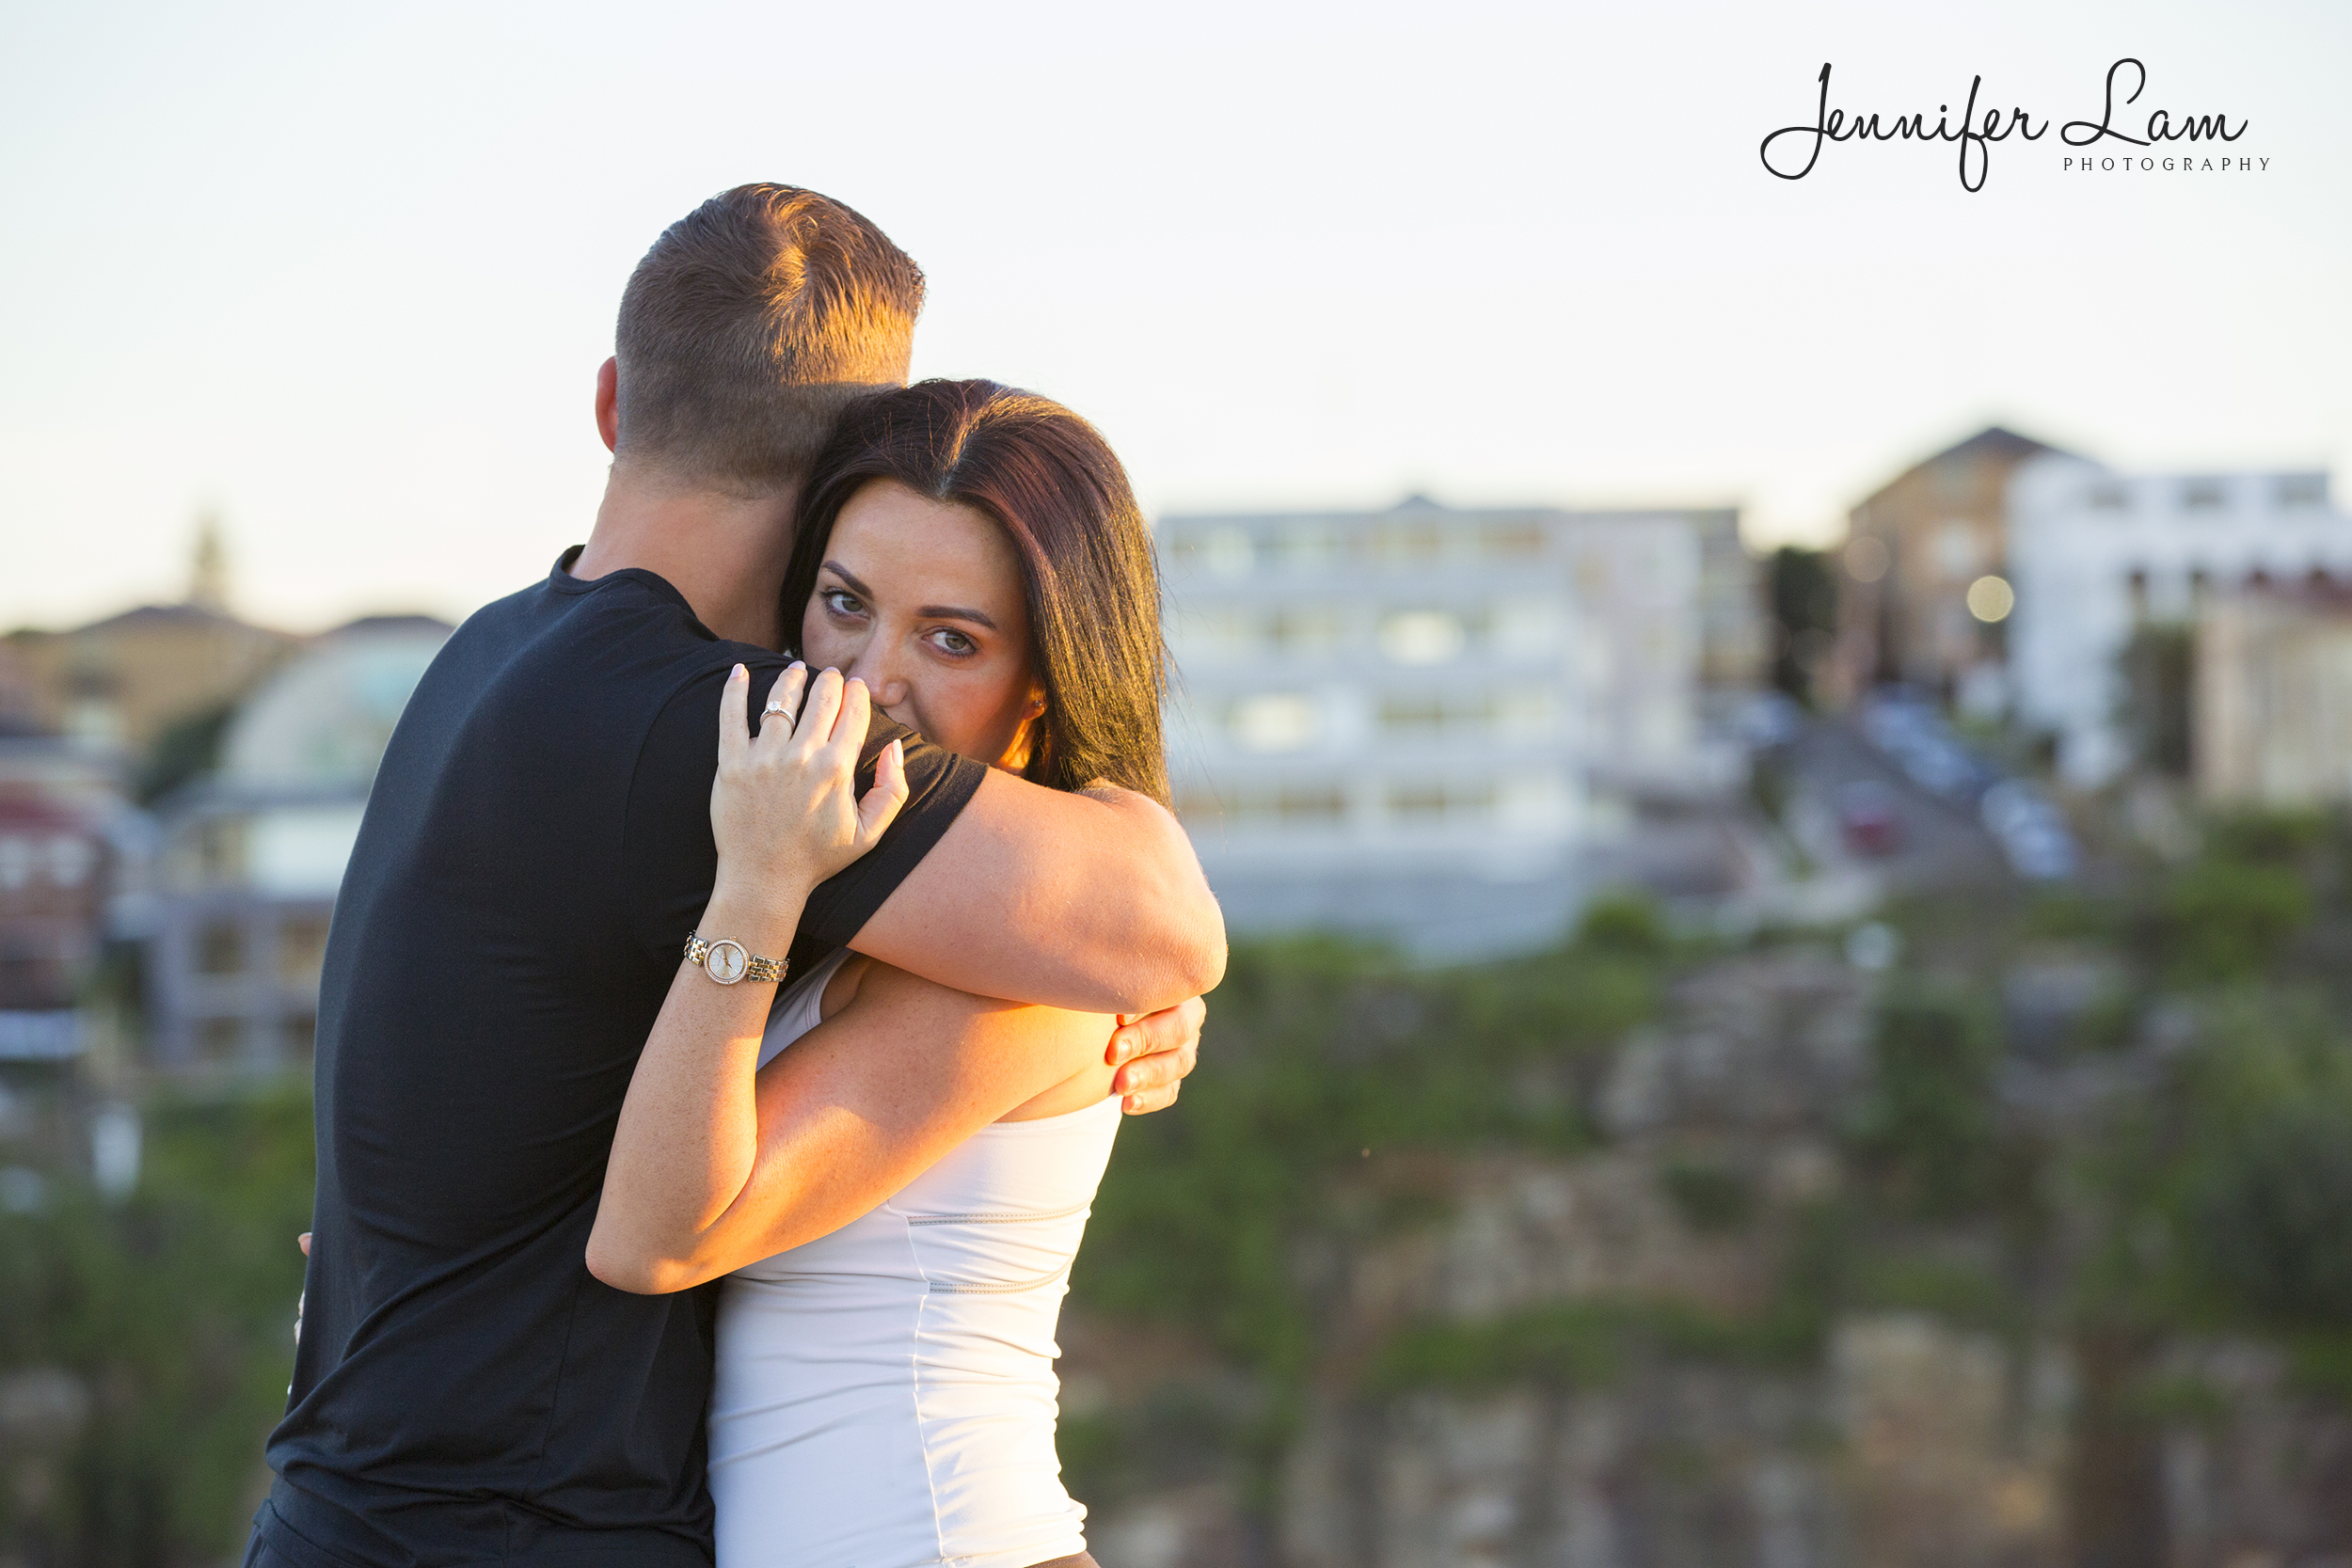 Engagement - Sydney Pre Wedding Photography - Jennifer Lam Photography 3a.jpg